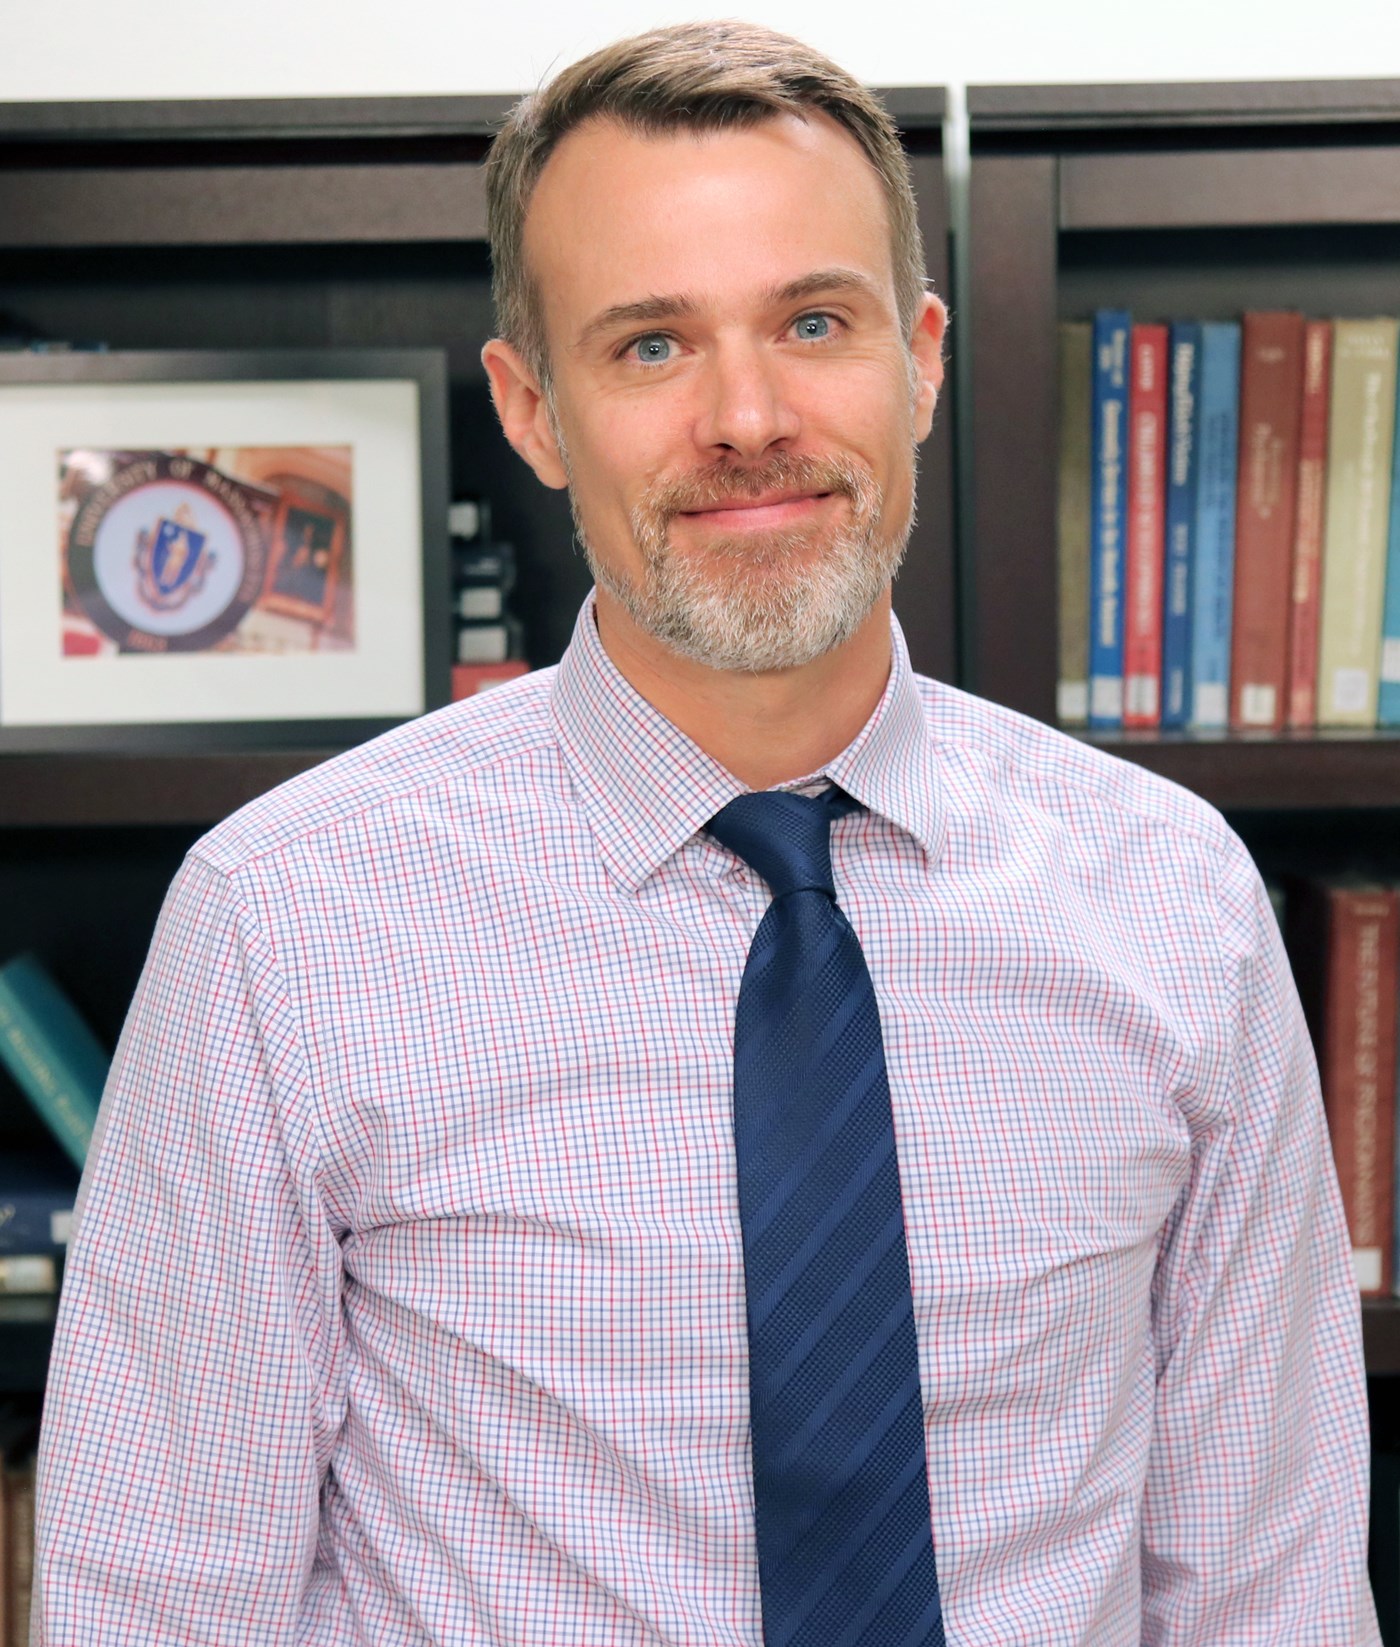 David McManus is an Associate Professor, Director of Atrial Fibrillation Treatment Program, Department of Medicine, UMass Medical School and Co-Director - CHORDS, Associate Professor at UMass Lowell.